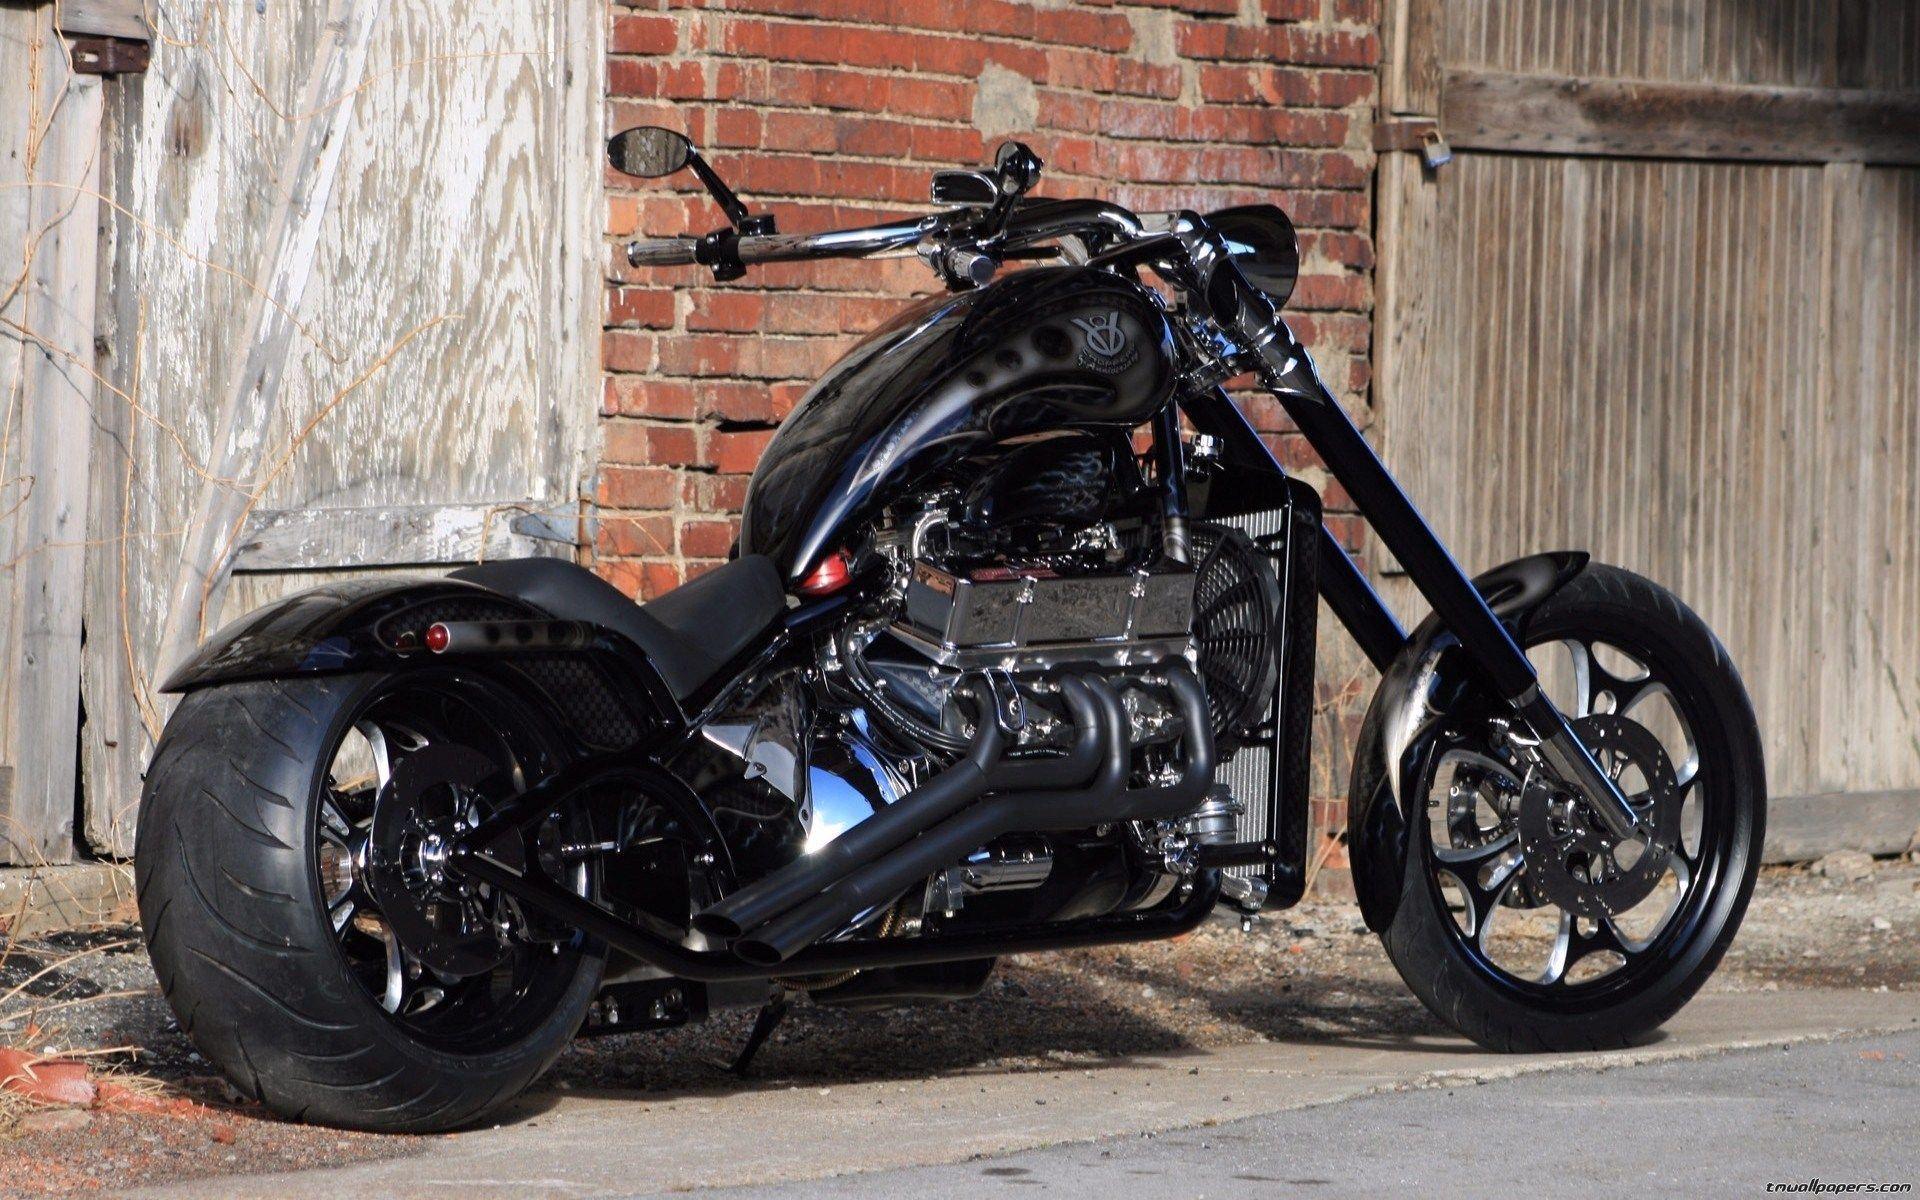 Harley Davidson Chopper Wallpaper HD 2015. High Definition